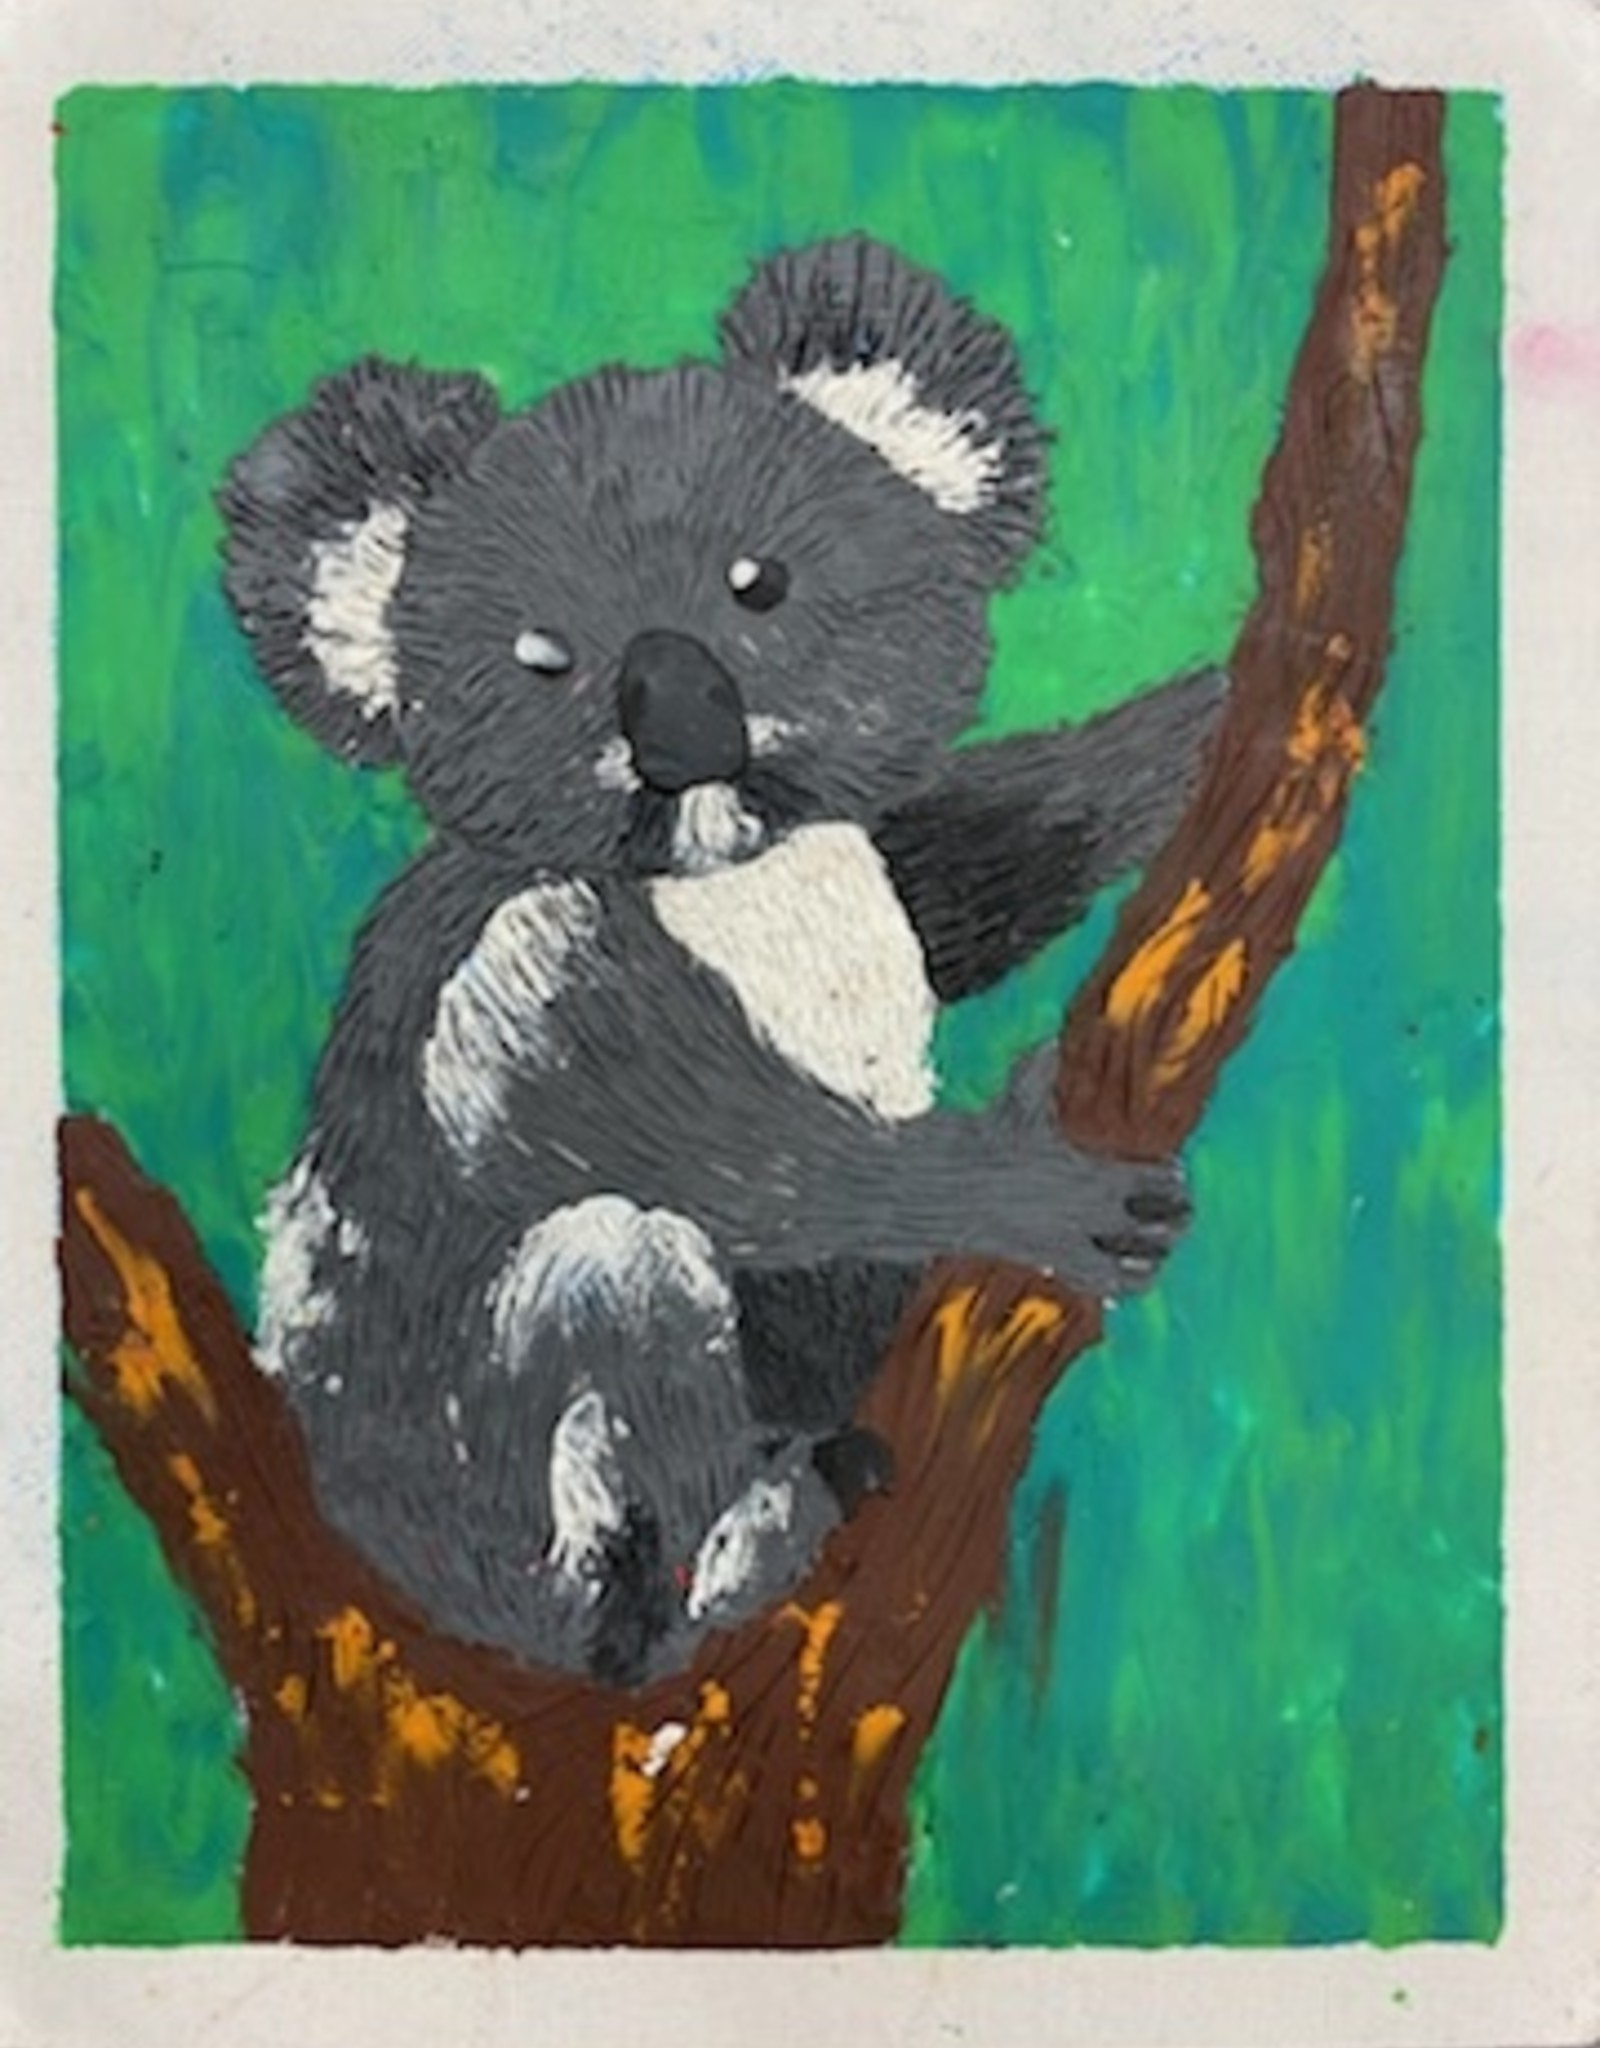 ART KIT Art Kit: Plasticine Relief Koala